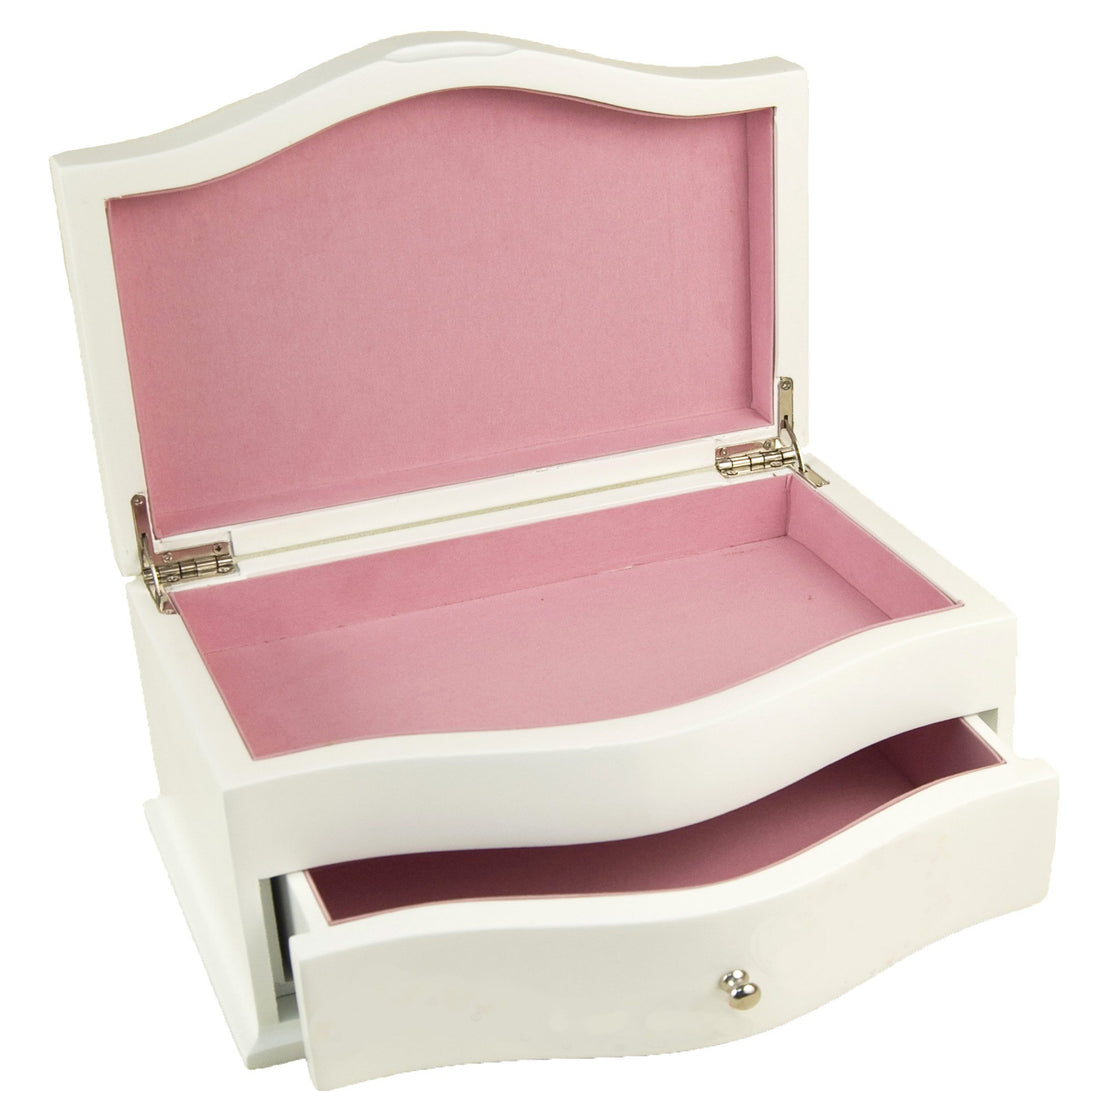 Personalized Teal monogram Design Princess Jewelry Box